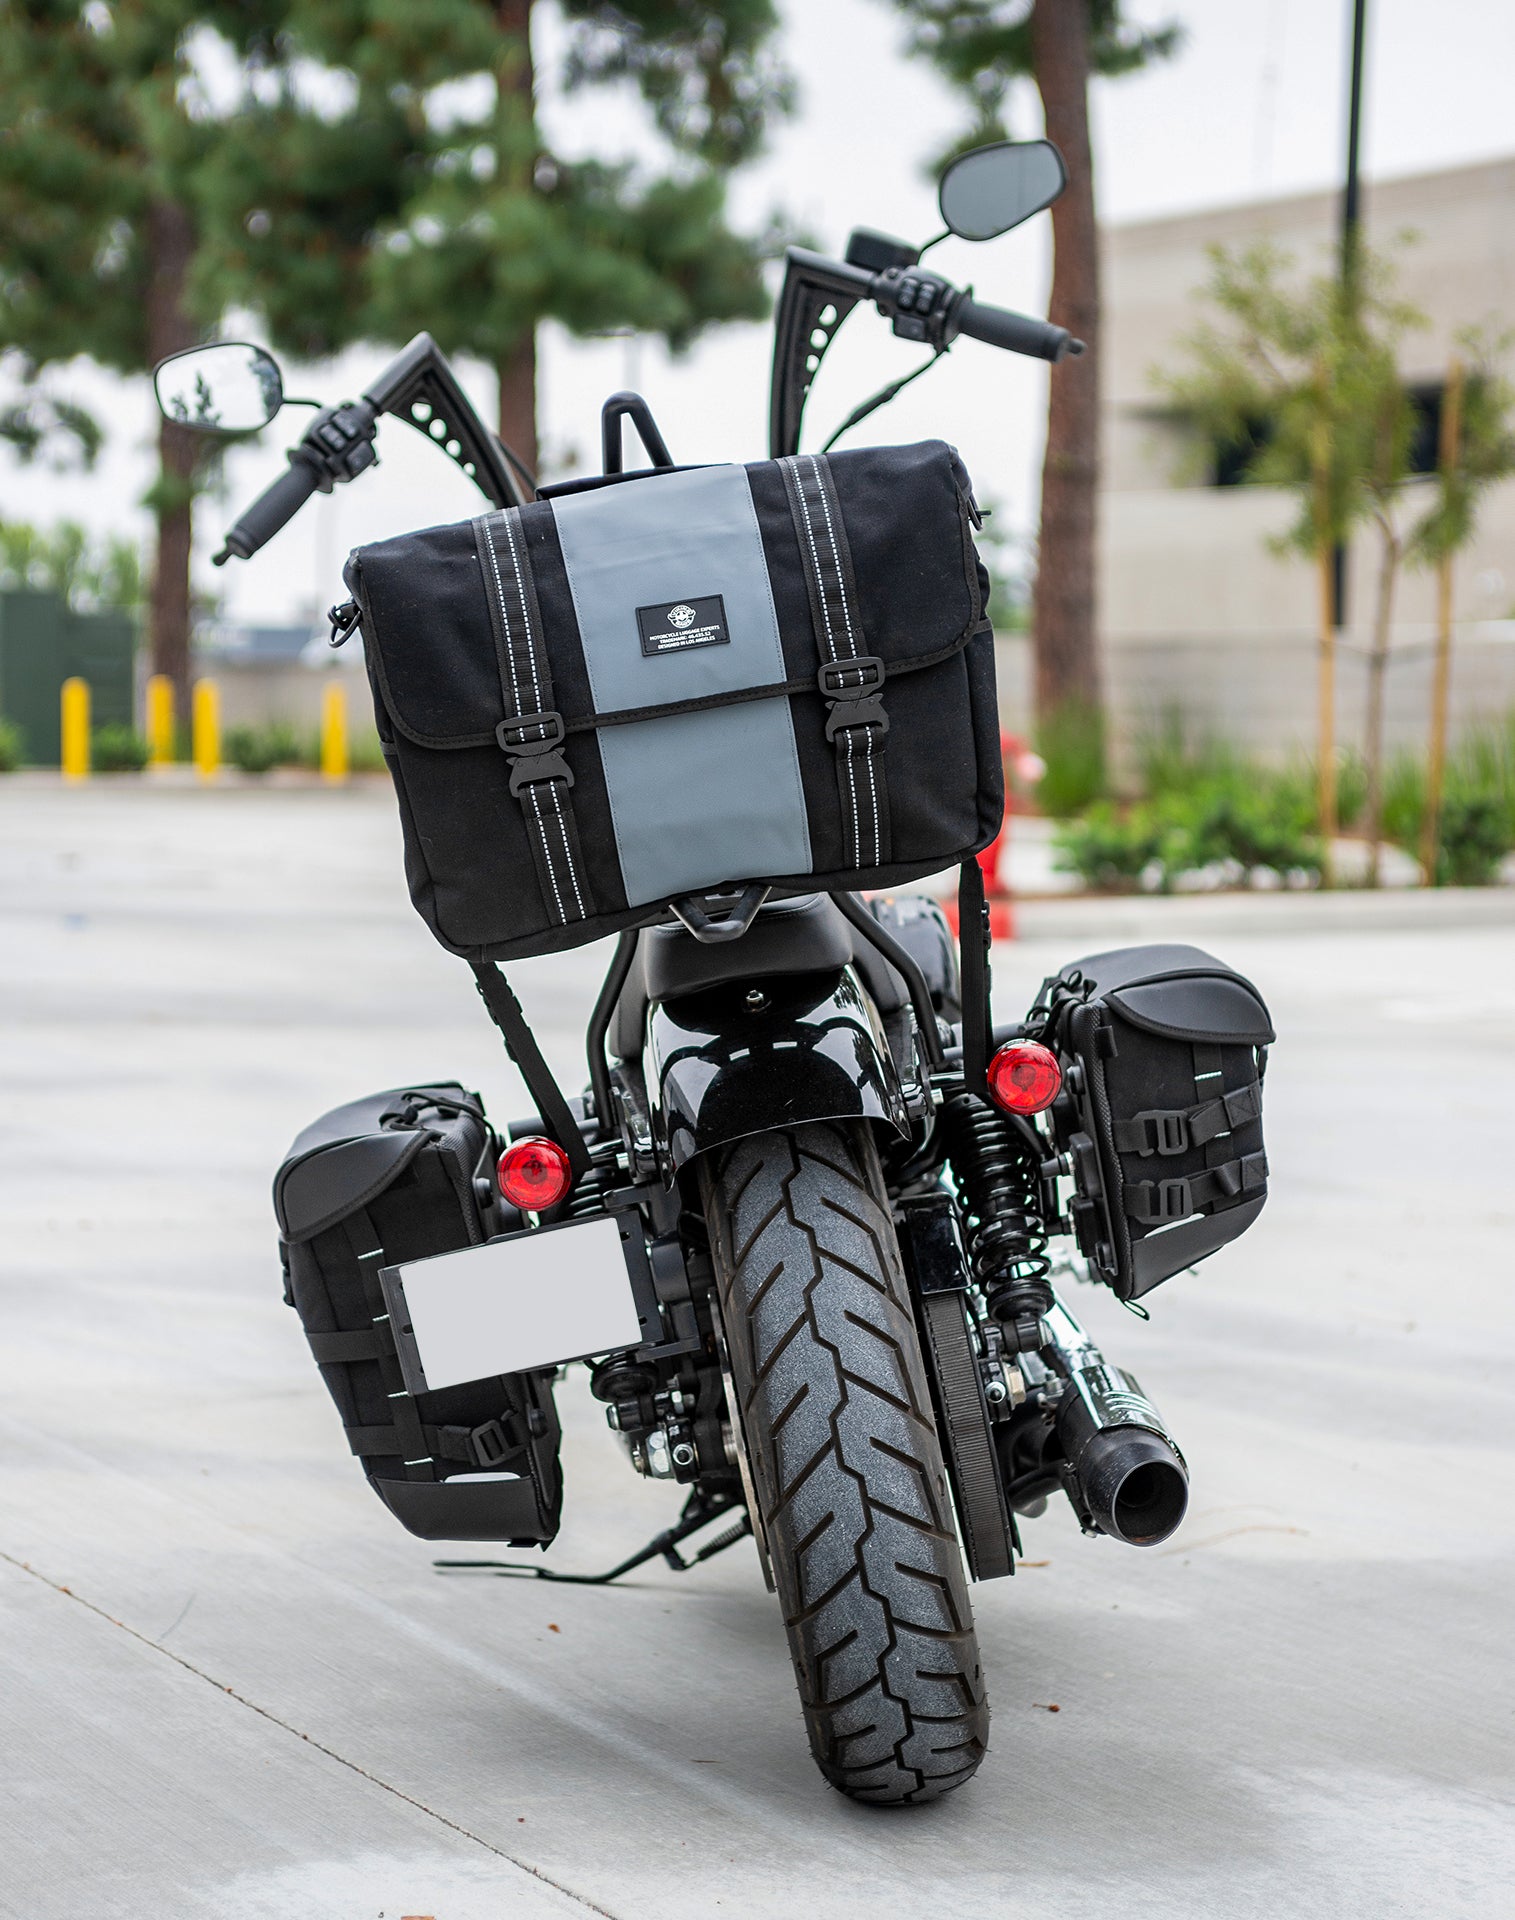 23L - Duo-tone Medium Kawasaki Motorcycle Messenger Bag Gray/Black